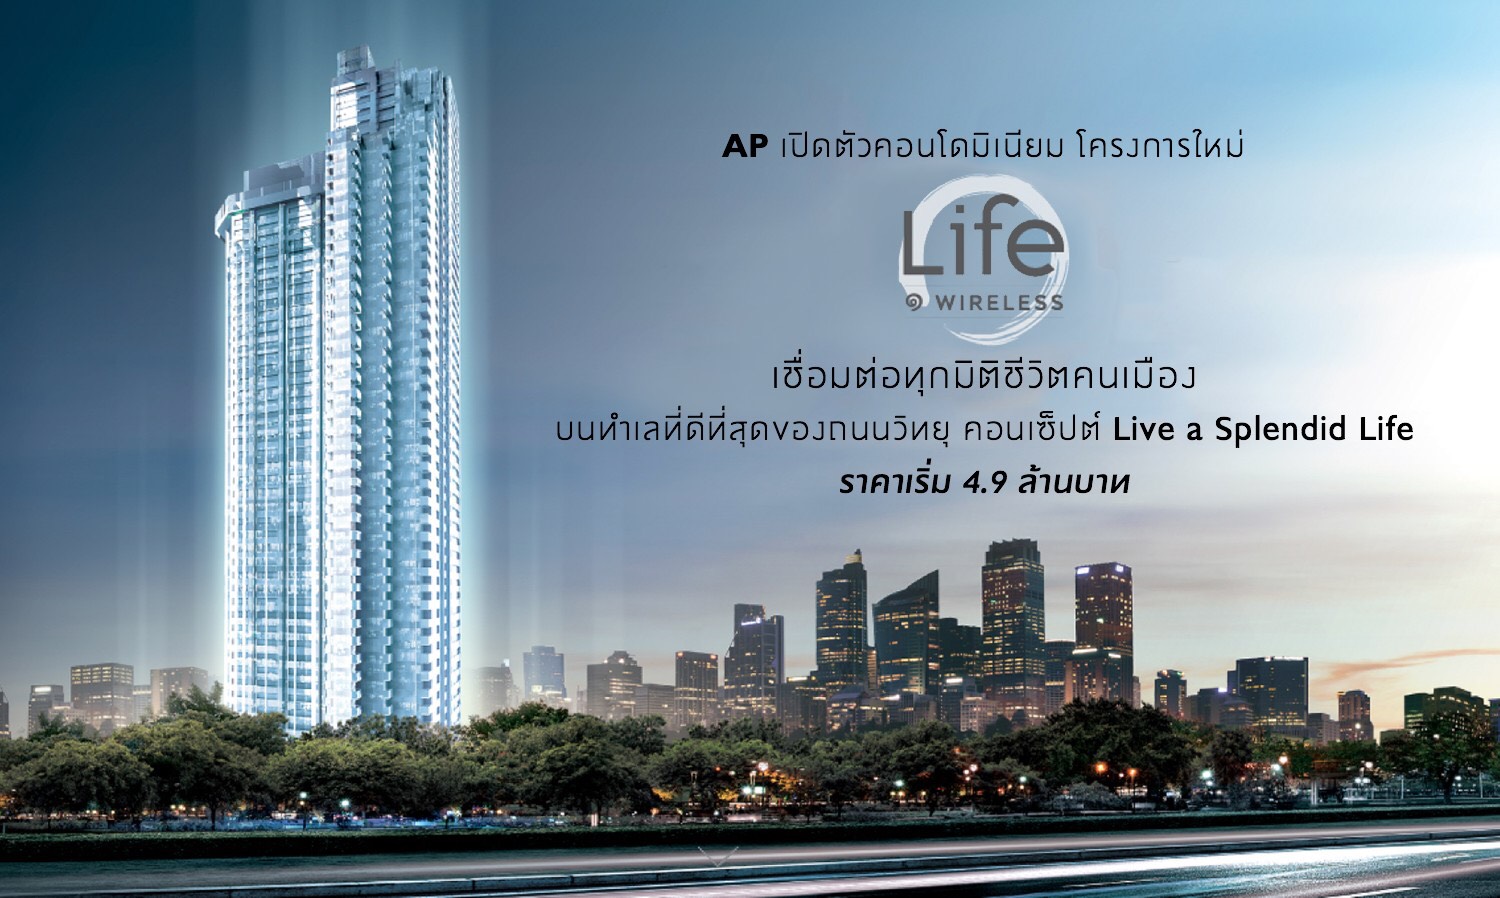 AP เปิดตัวคอนโดมิเนียม โครงการใหม่ “Life ๑ Wireless” เชื่อมต่อทุกมิติชีวิตคนเมือง บนทำเลที่ดีที่สุดของถนนวิทยุ